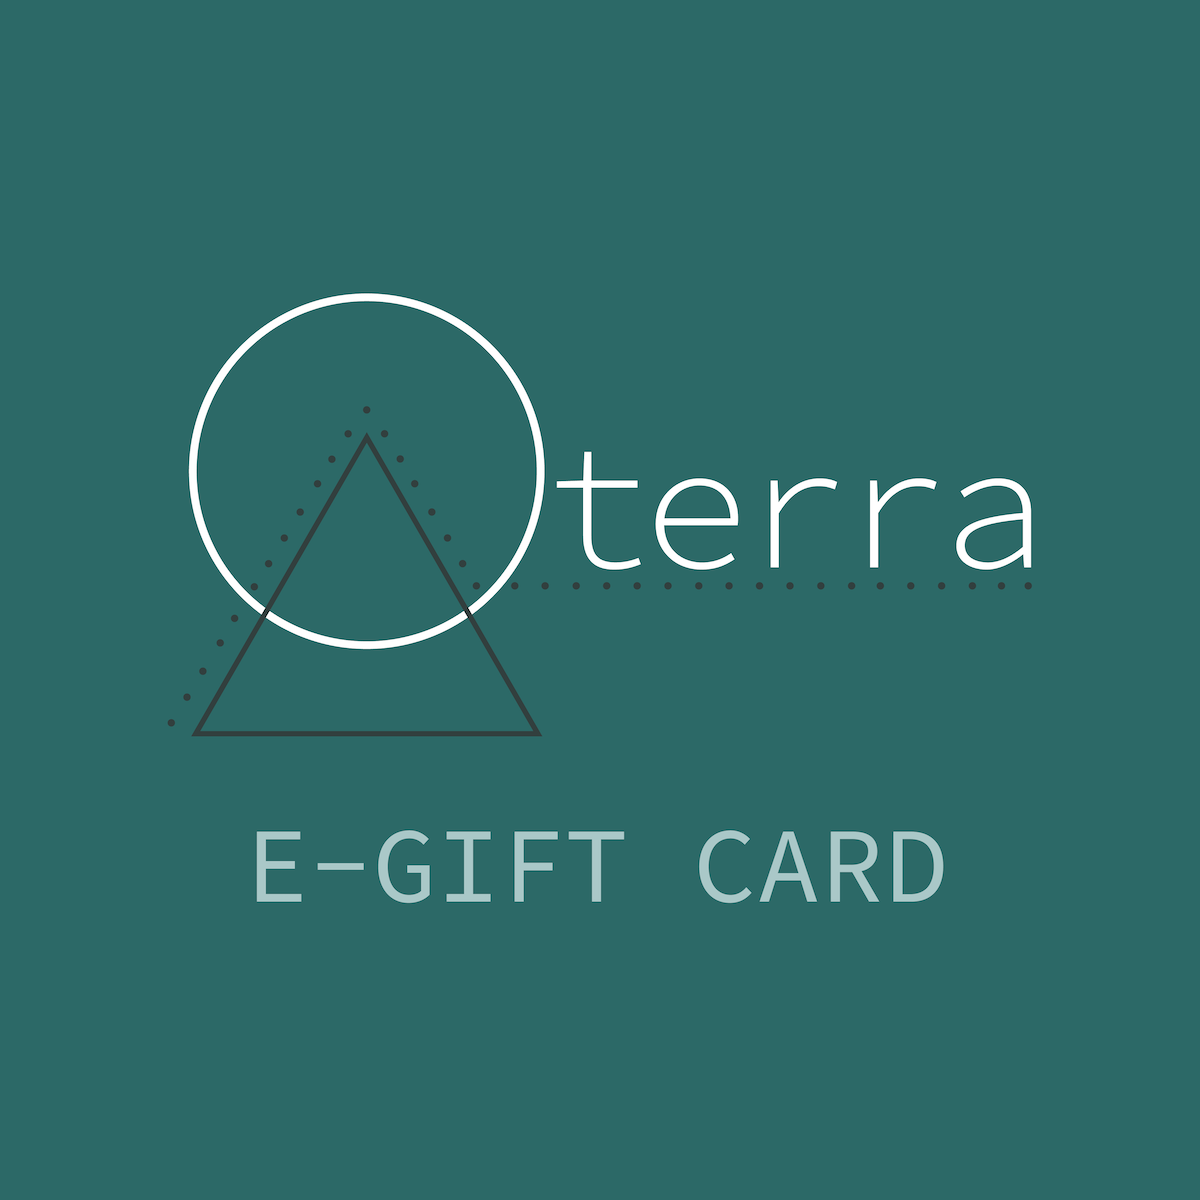 Oterra E-Gift Card